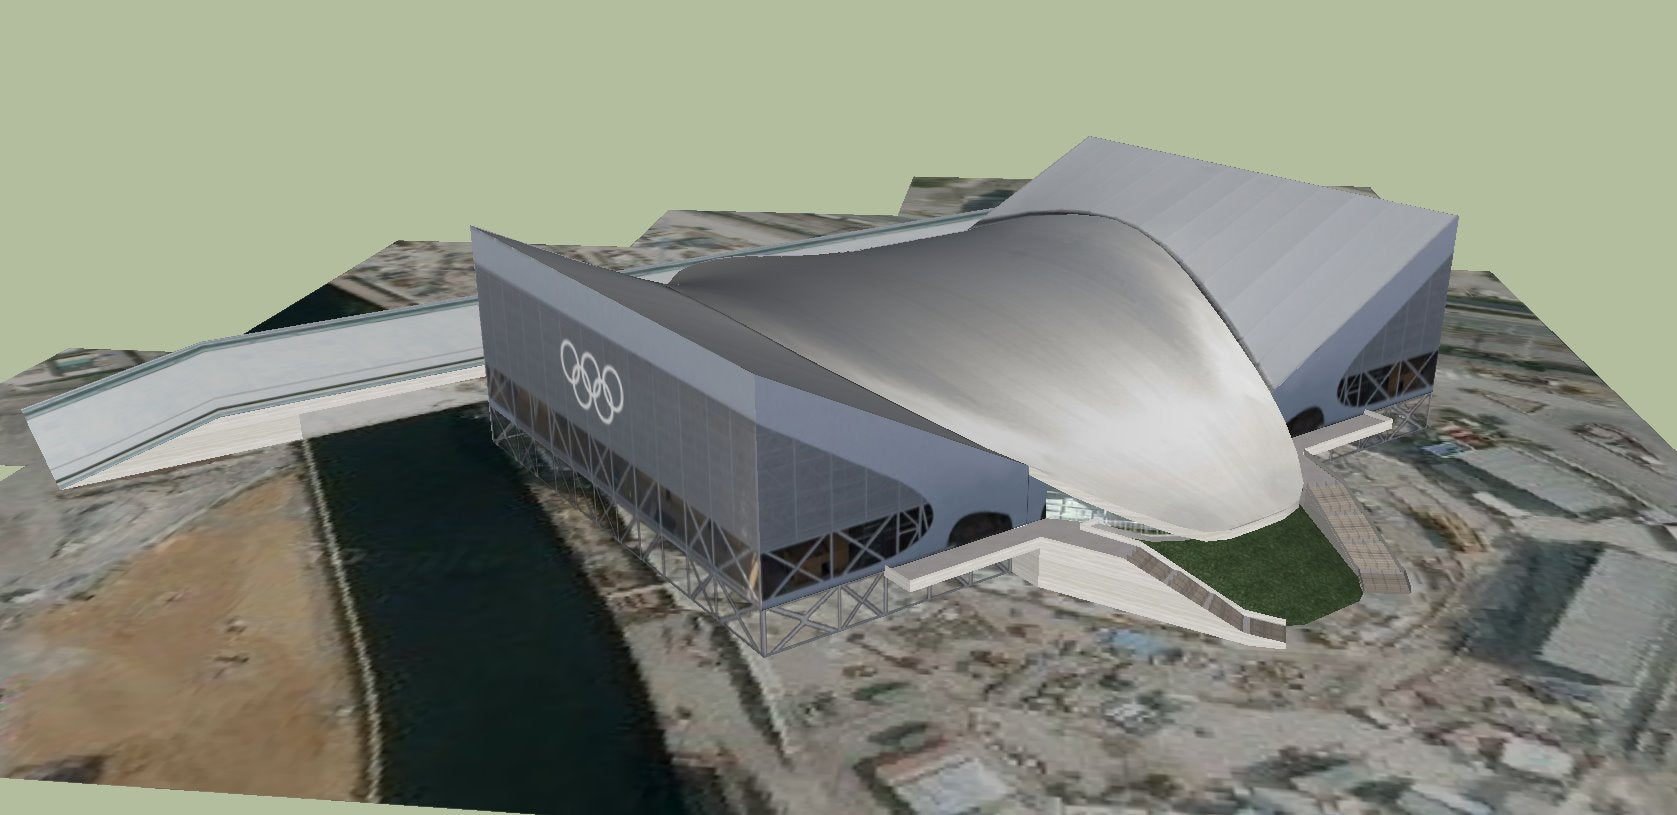 【Famous Architecture Project】London aquatics center Sketchup 3d model-Zaha hadid architecture-Architectural 3D CAD model